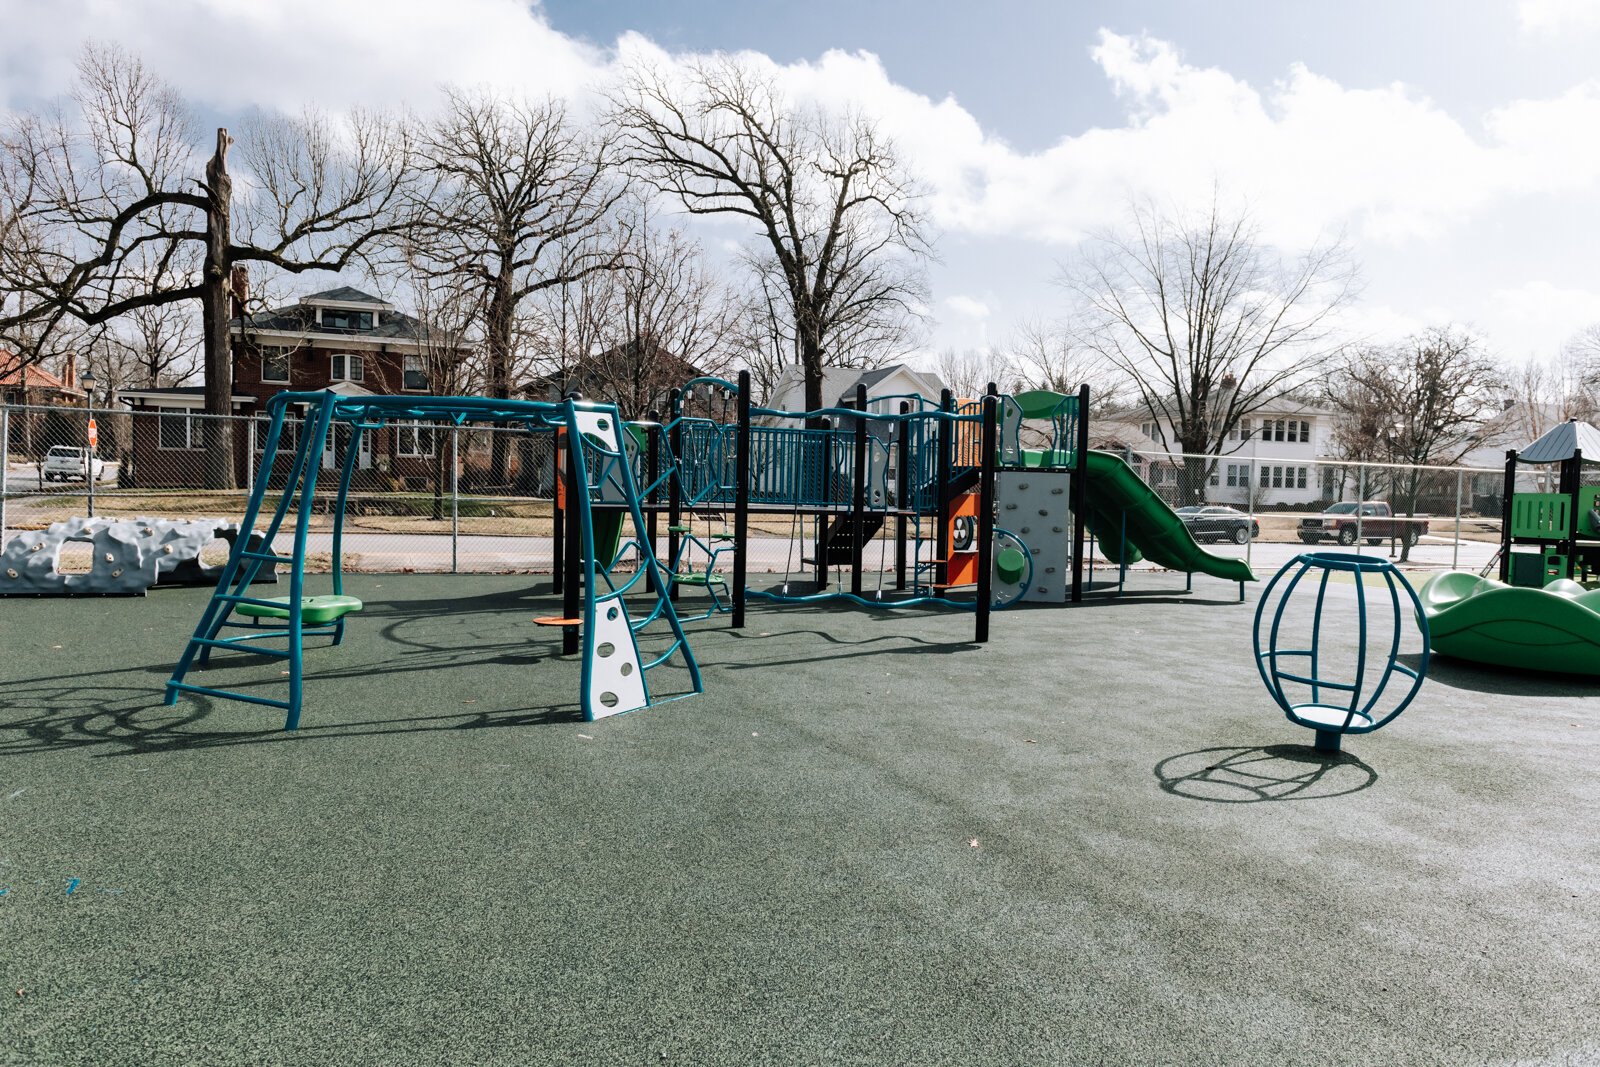 Playground equipment at Forest Park Elementary School.